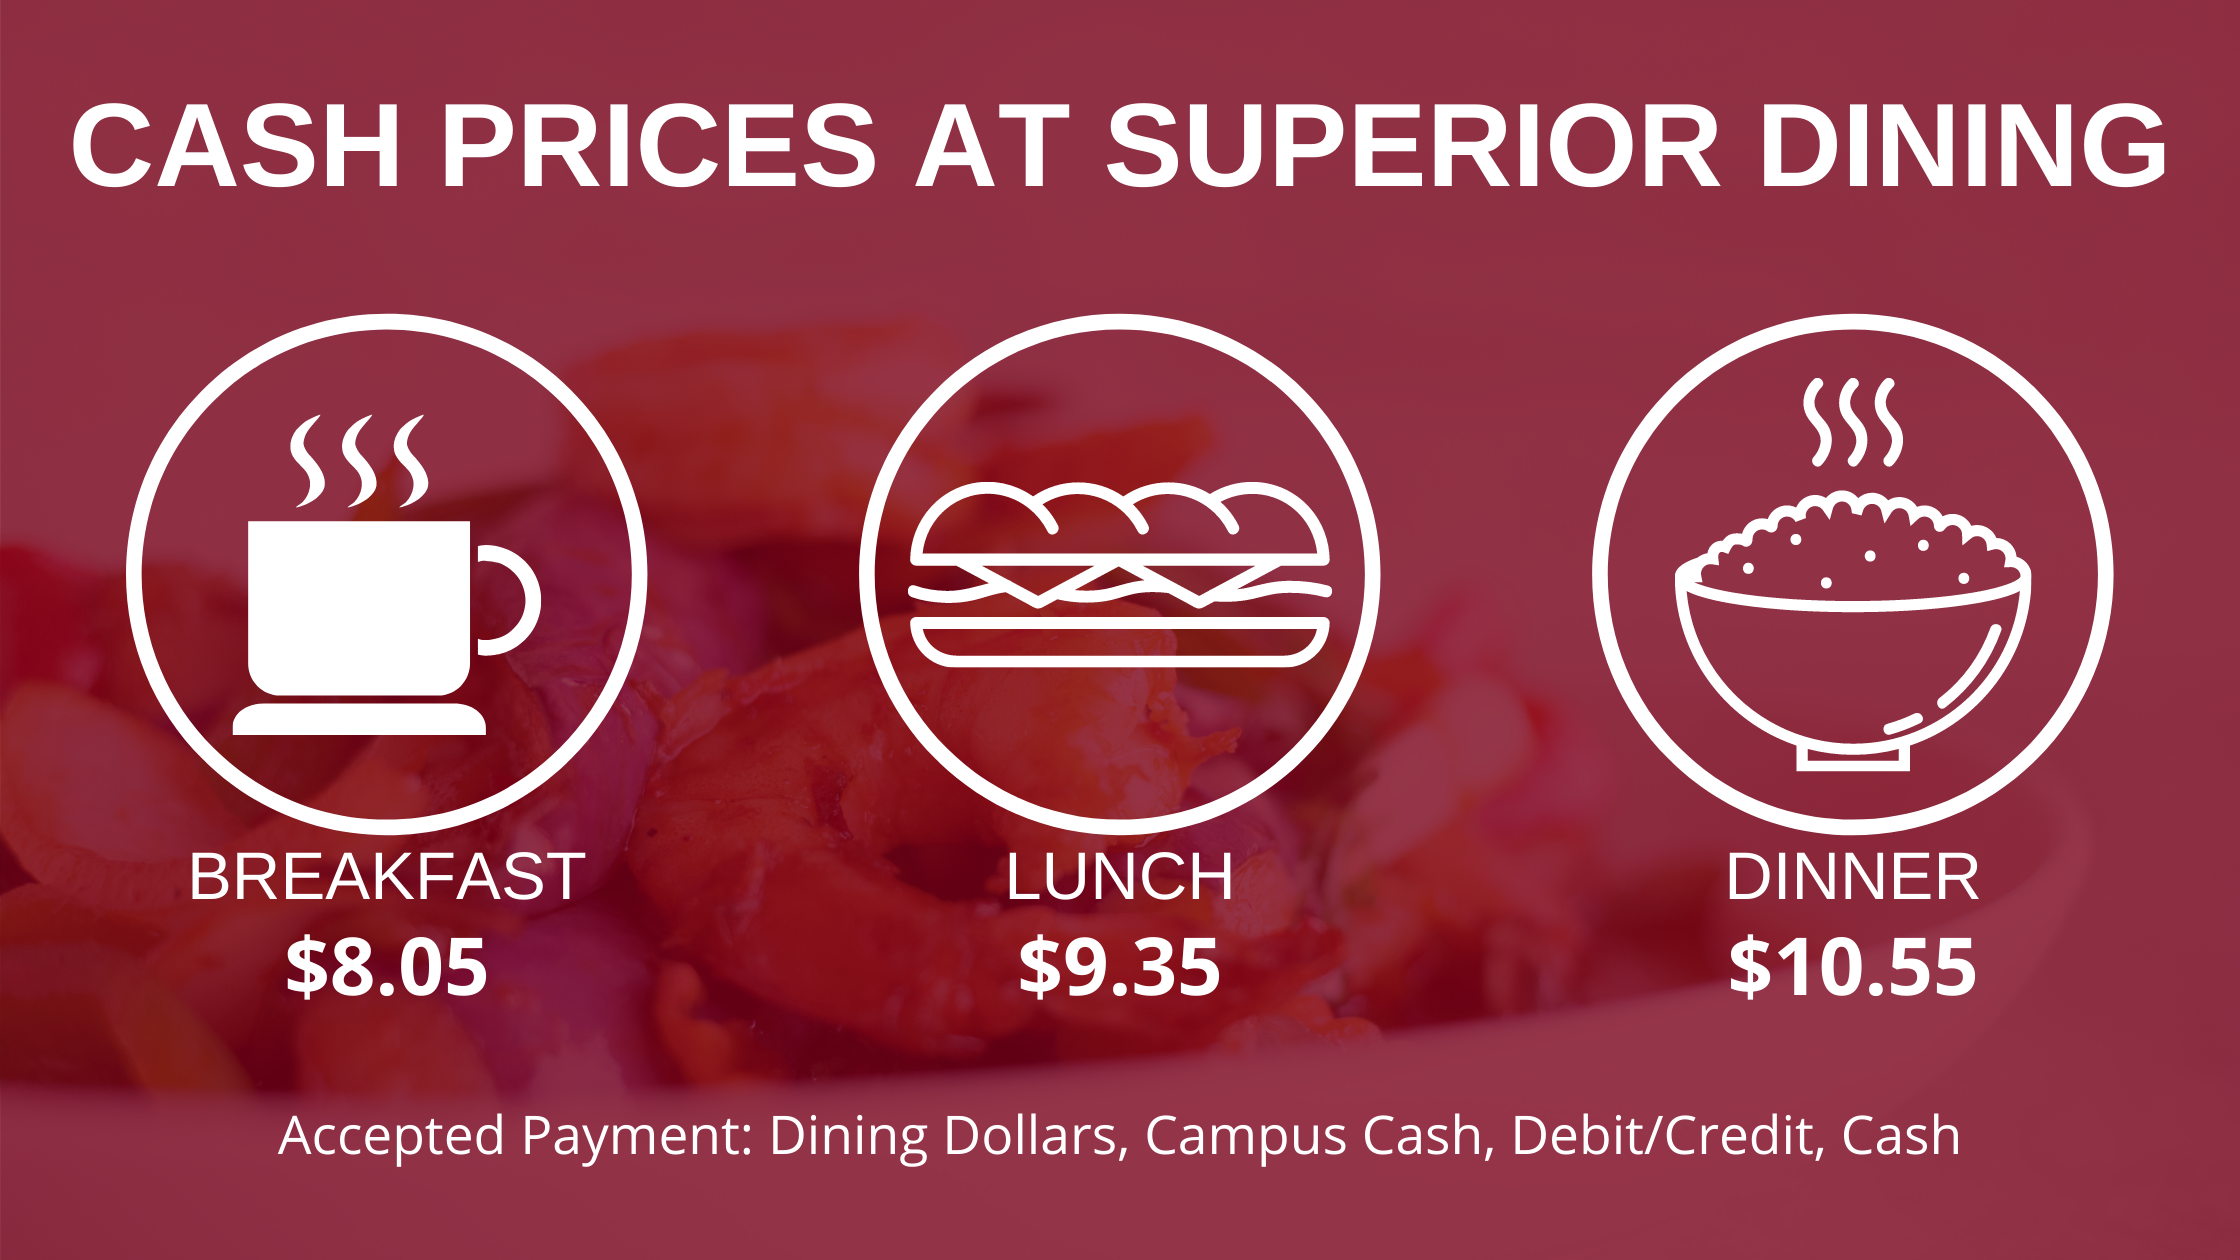 Breakfast - $8.05, Lunch - $9.35, Dinner - $10.55